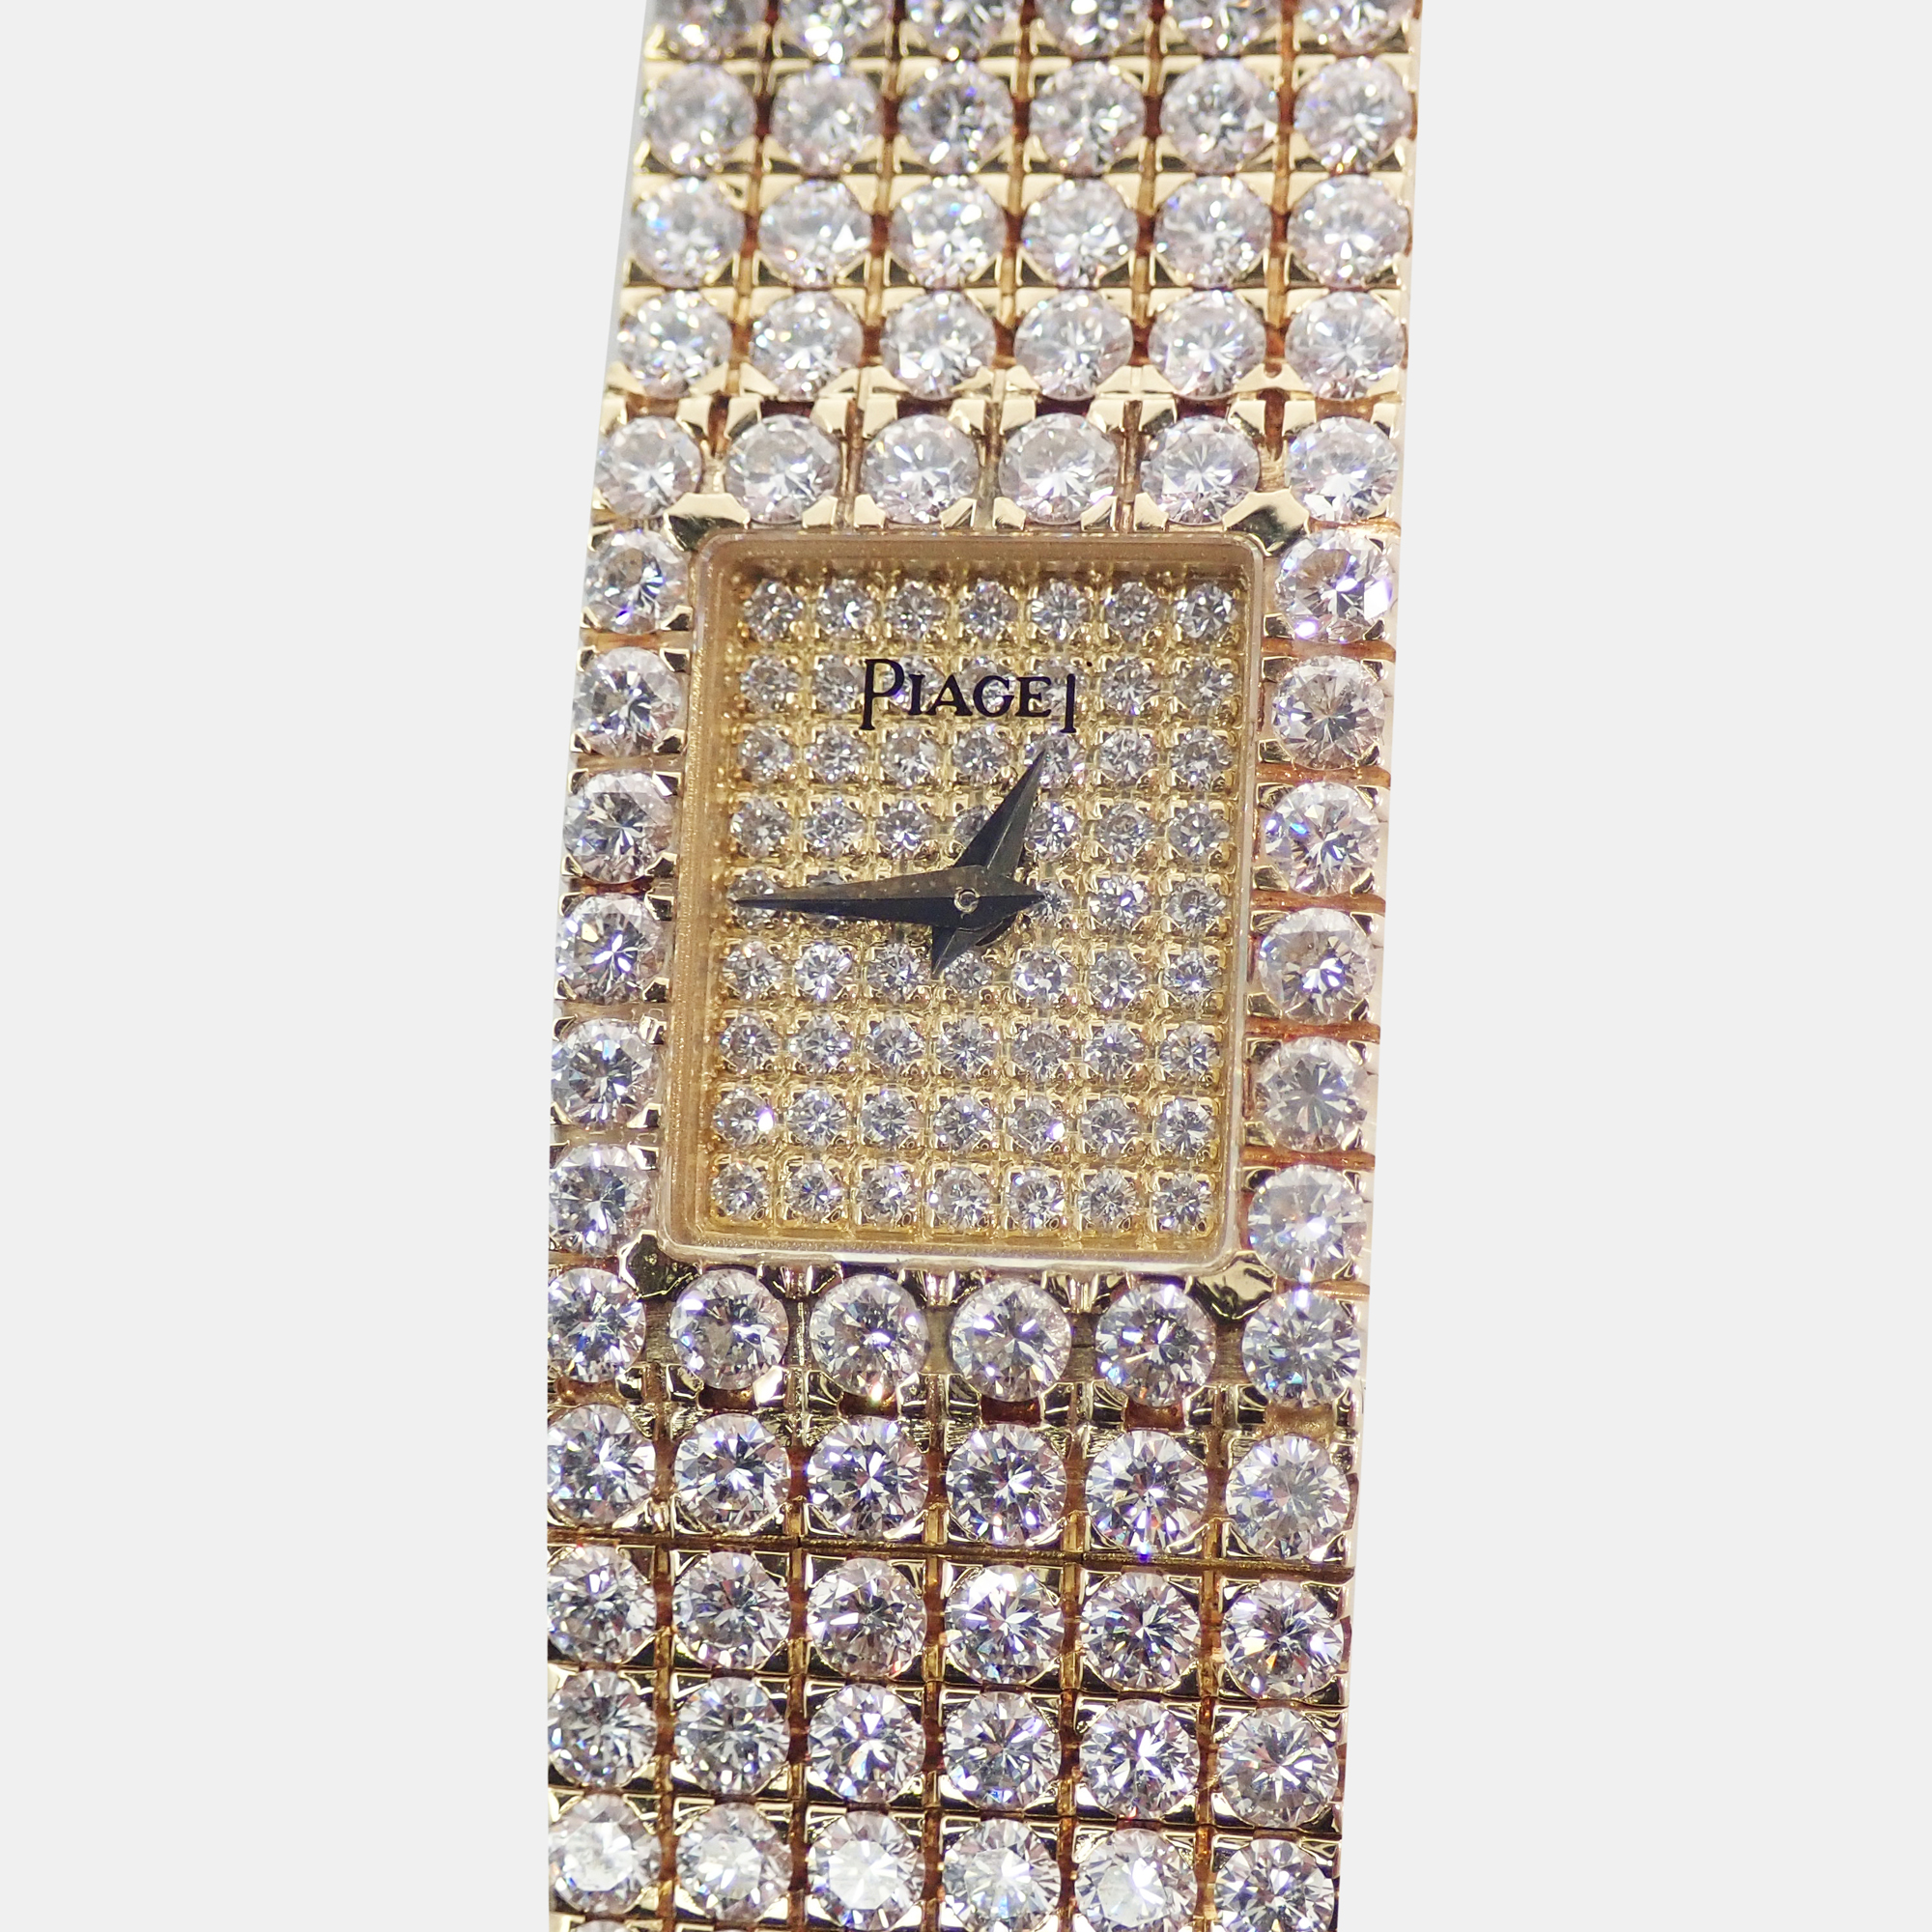 Piaget yellow gold tradition ladies genuine full diamond 15201 c626 women's watch 14.5 mm